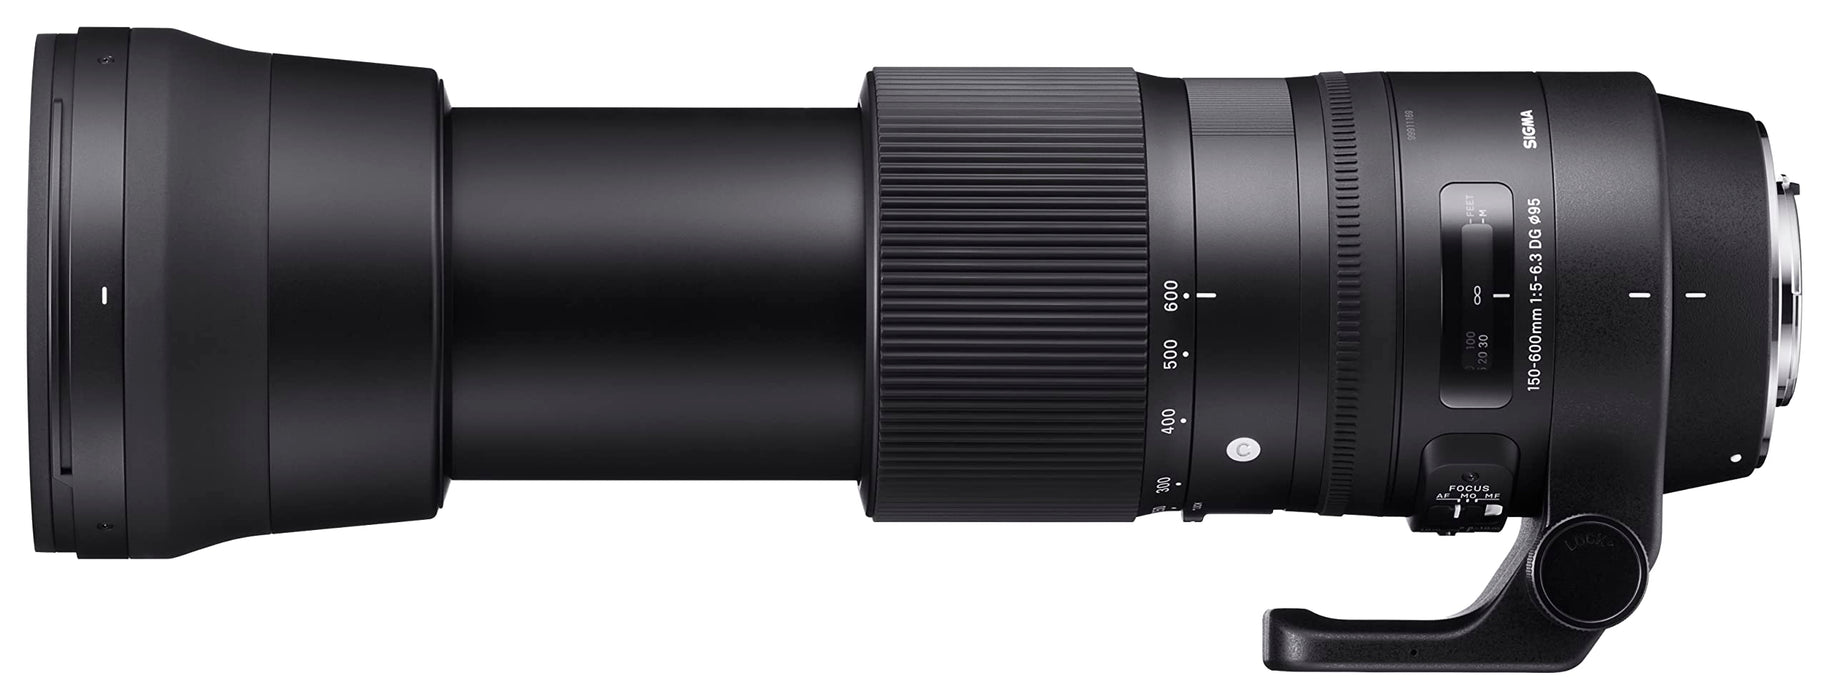 Sigma 150-600mm f/5-6.3 DG OS HSM Contemporary + TC-1401 (Nikon) - 1